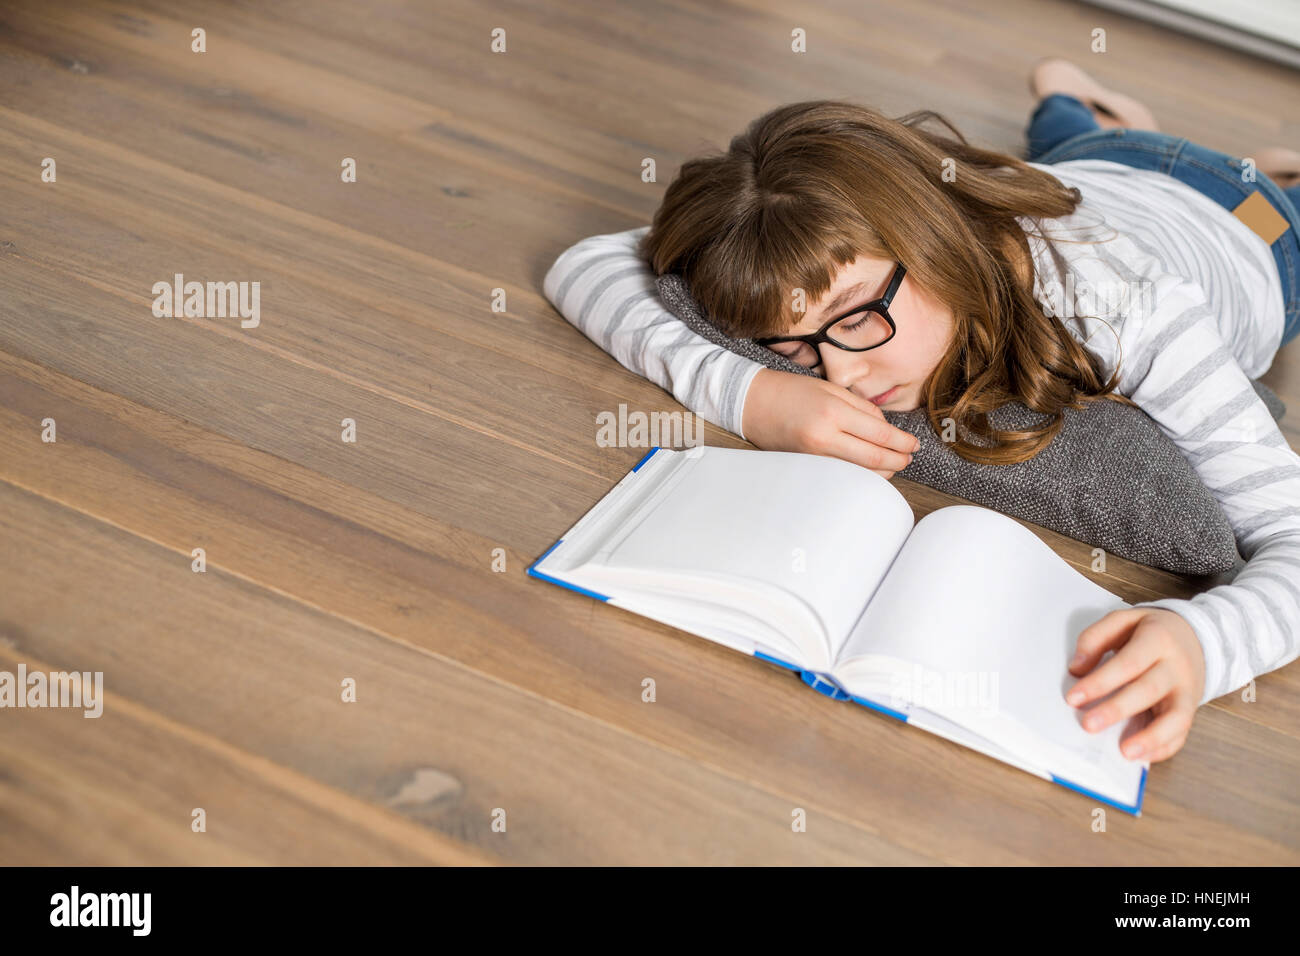 High angle view of teenage girl sleeping while studying on floor Stock Photo